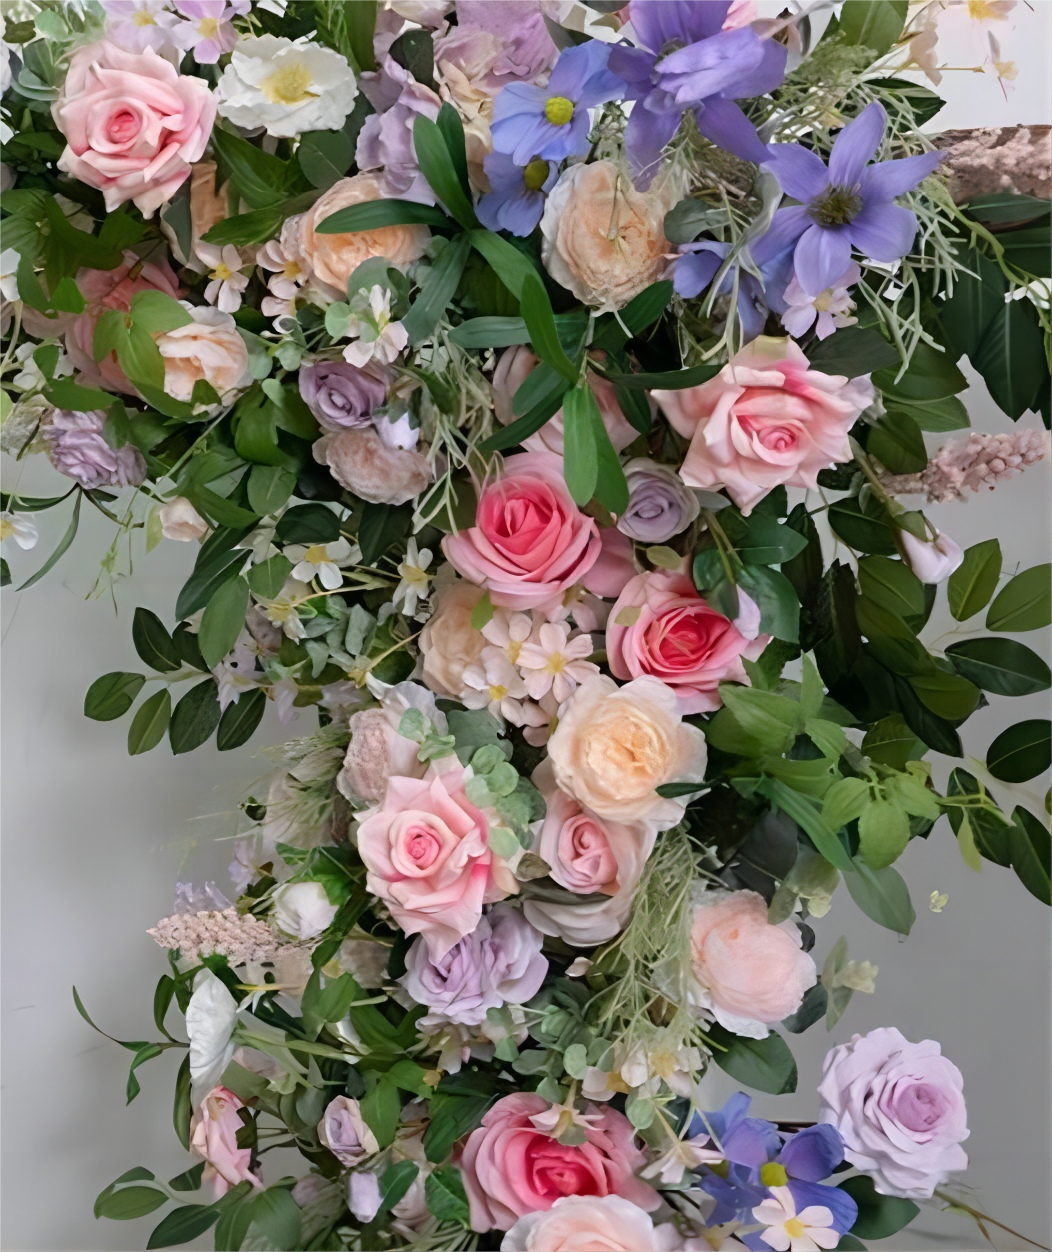 Artificial Flower Wedding Party Birthday Backdrop Decor CH9648